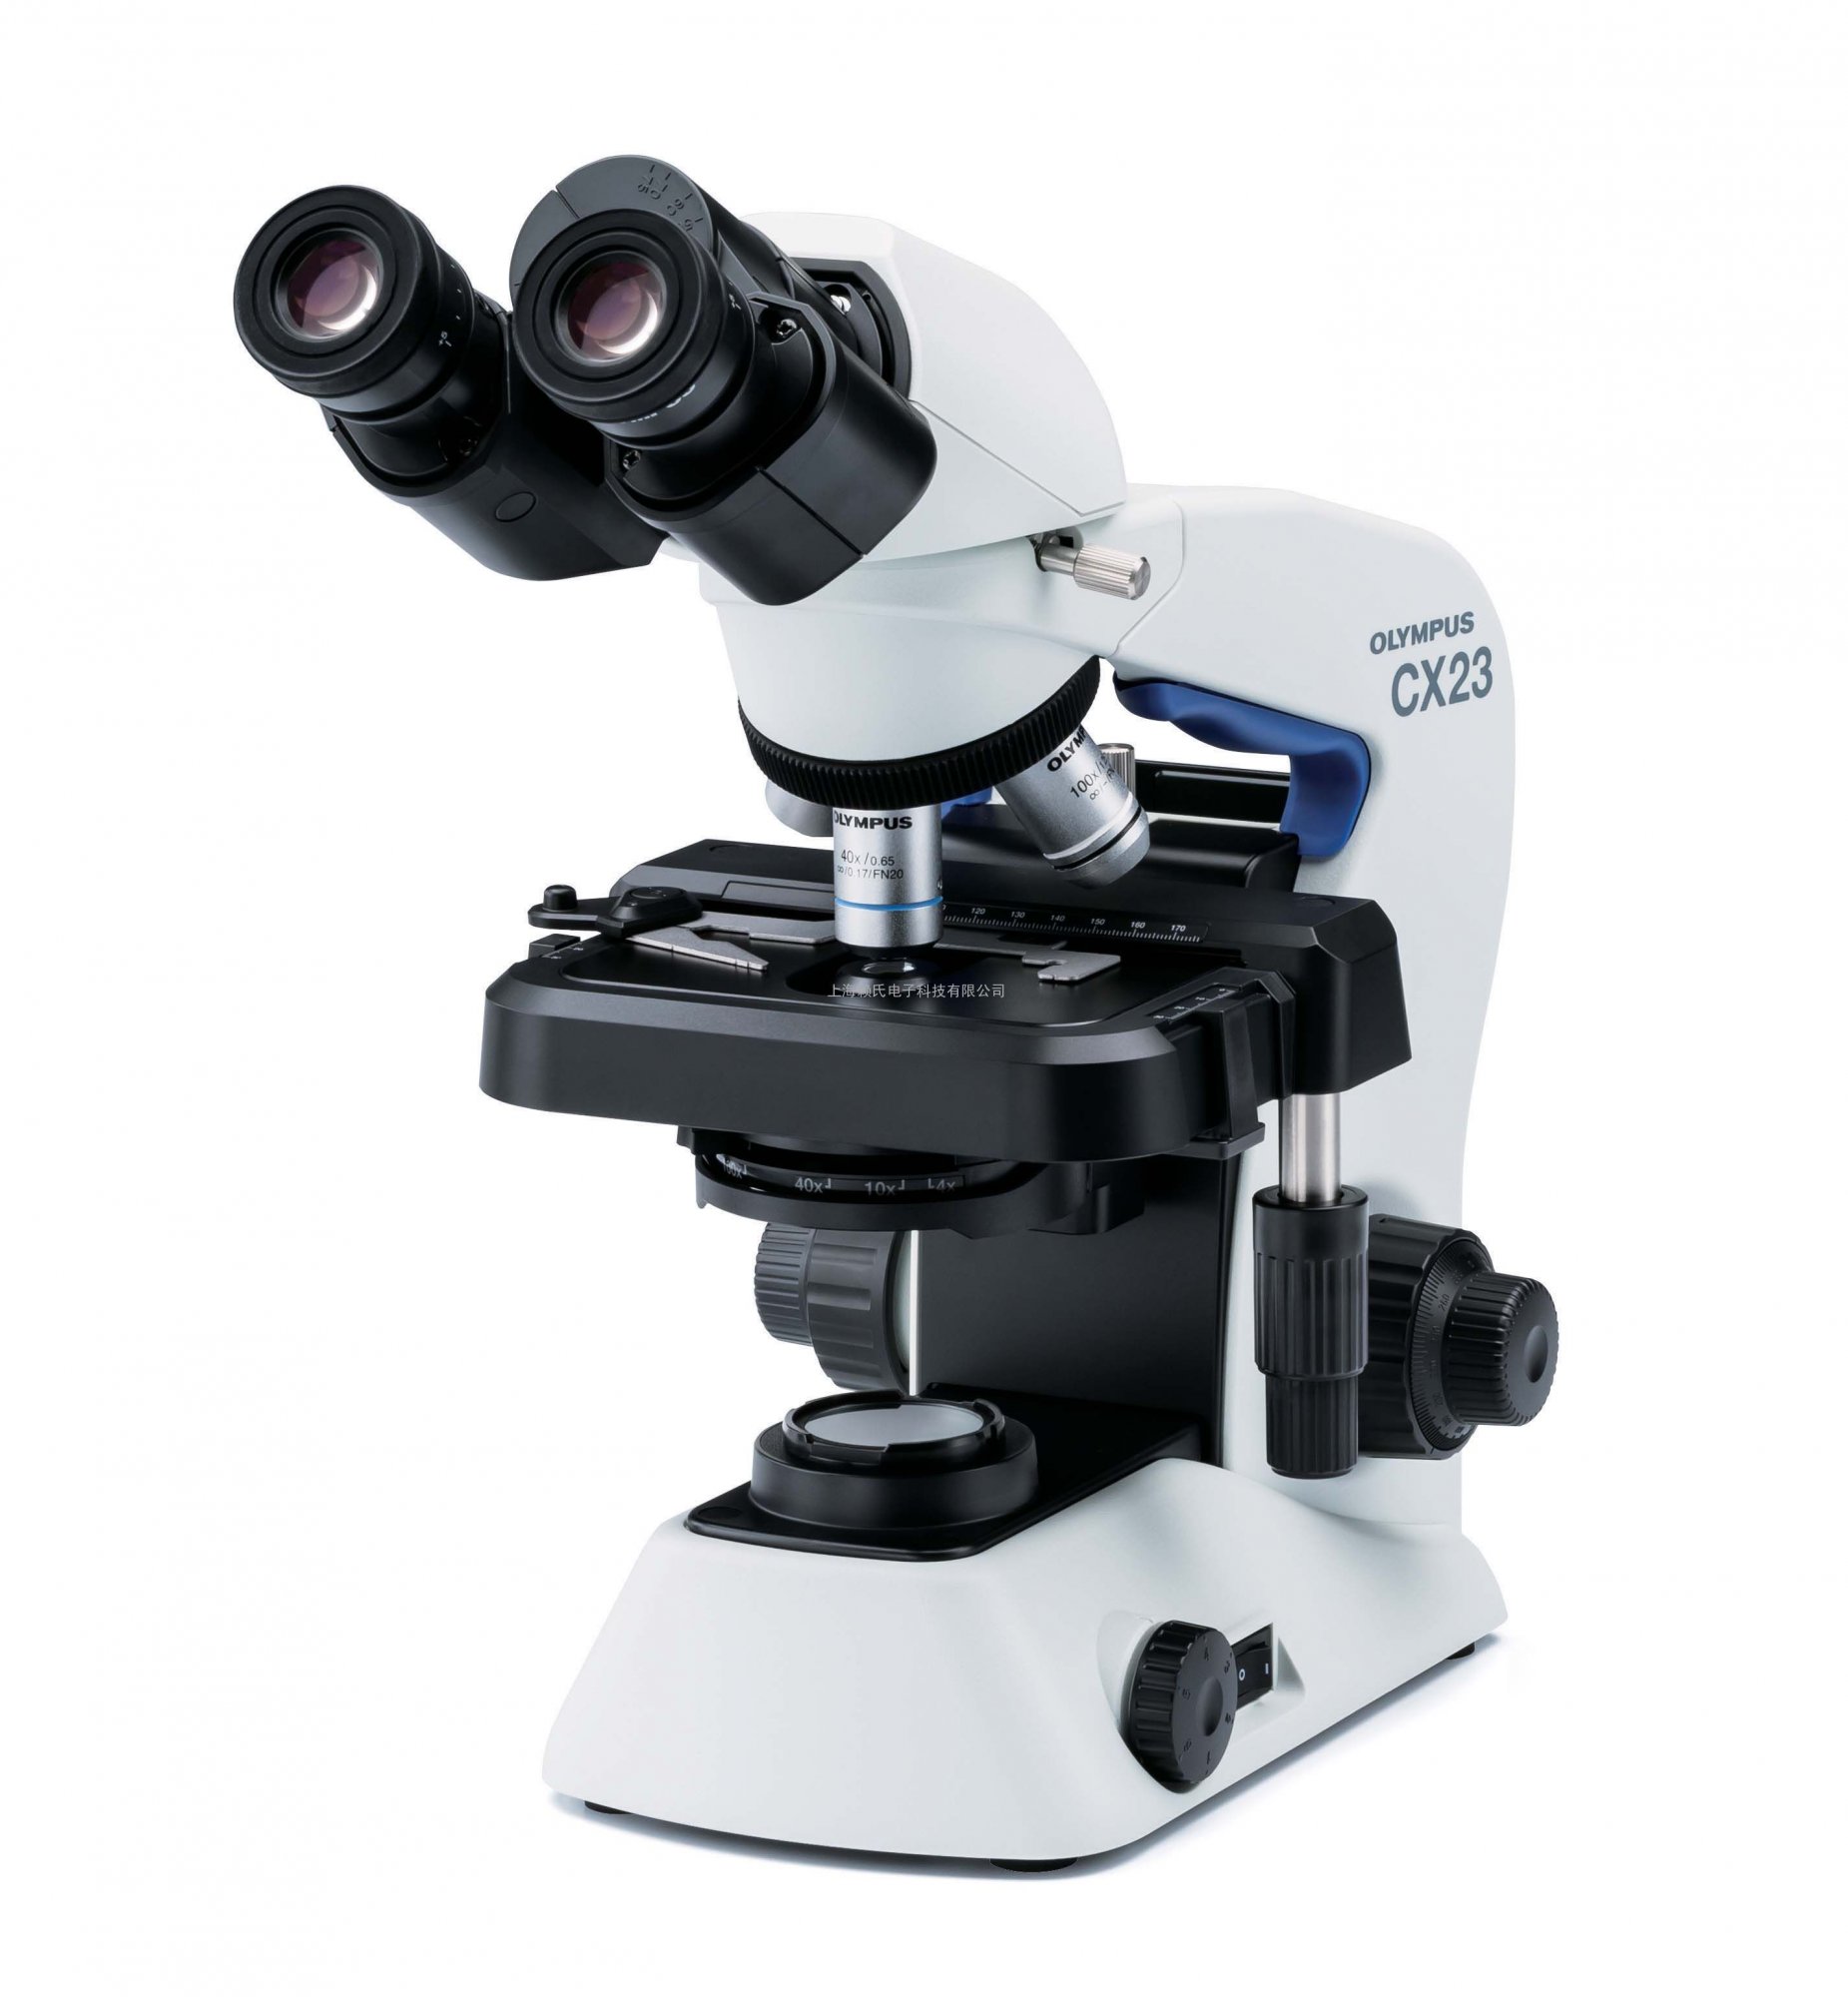 Olympus cx23 – важные детали микроскопа